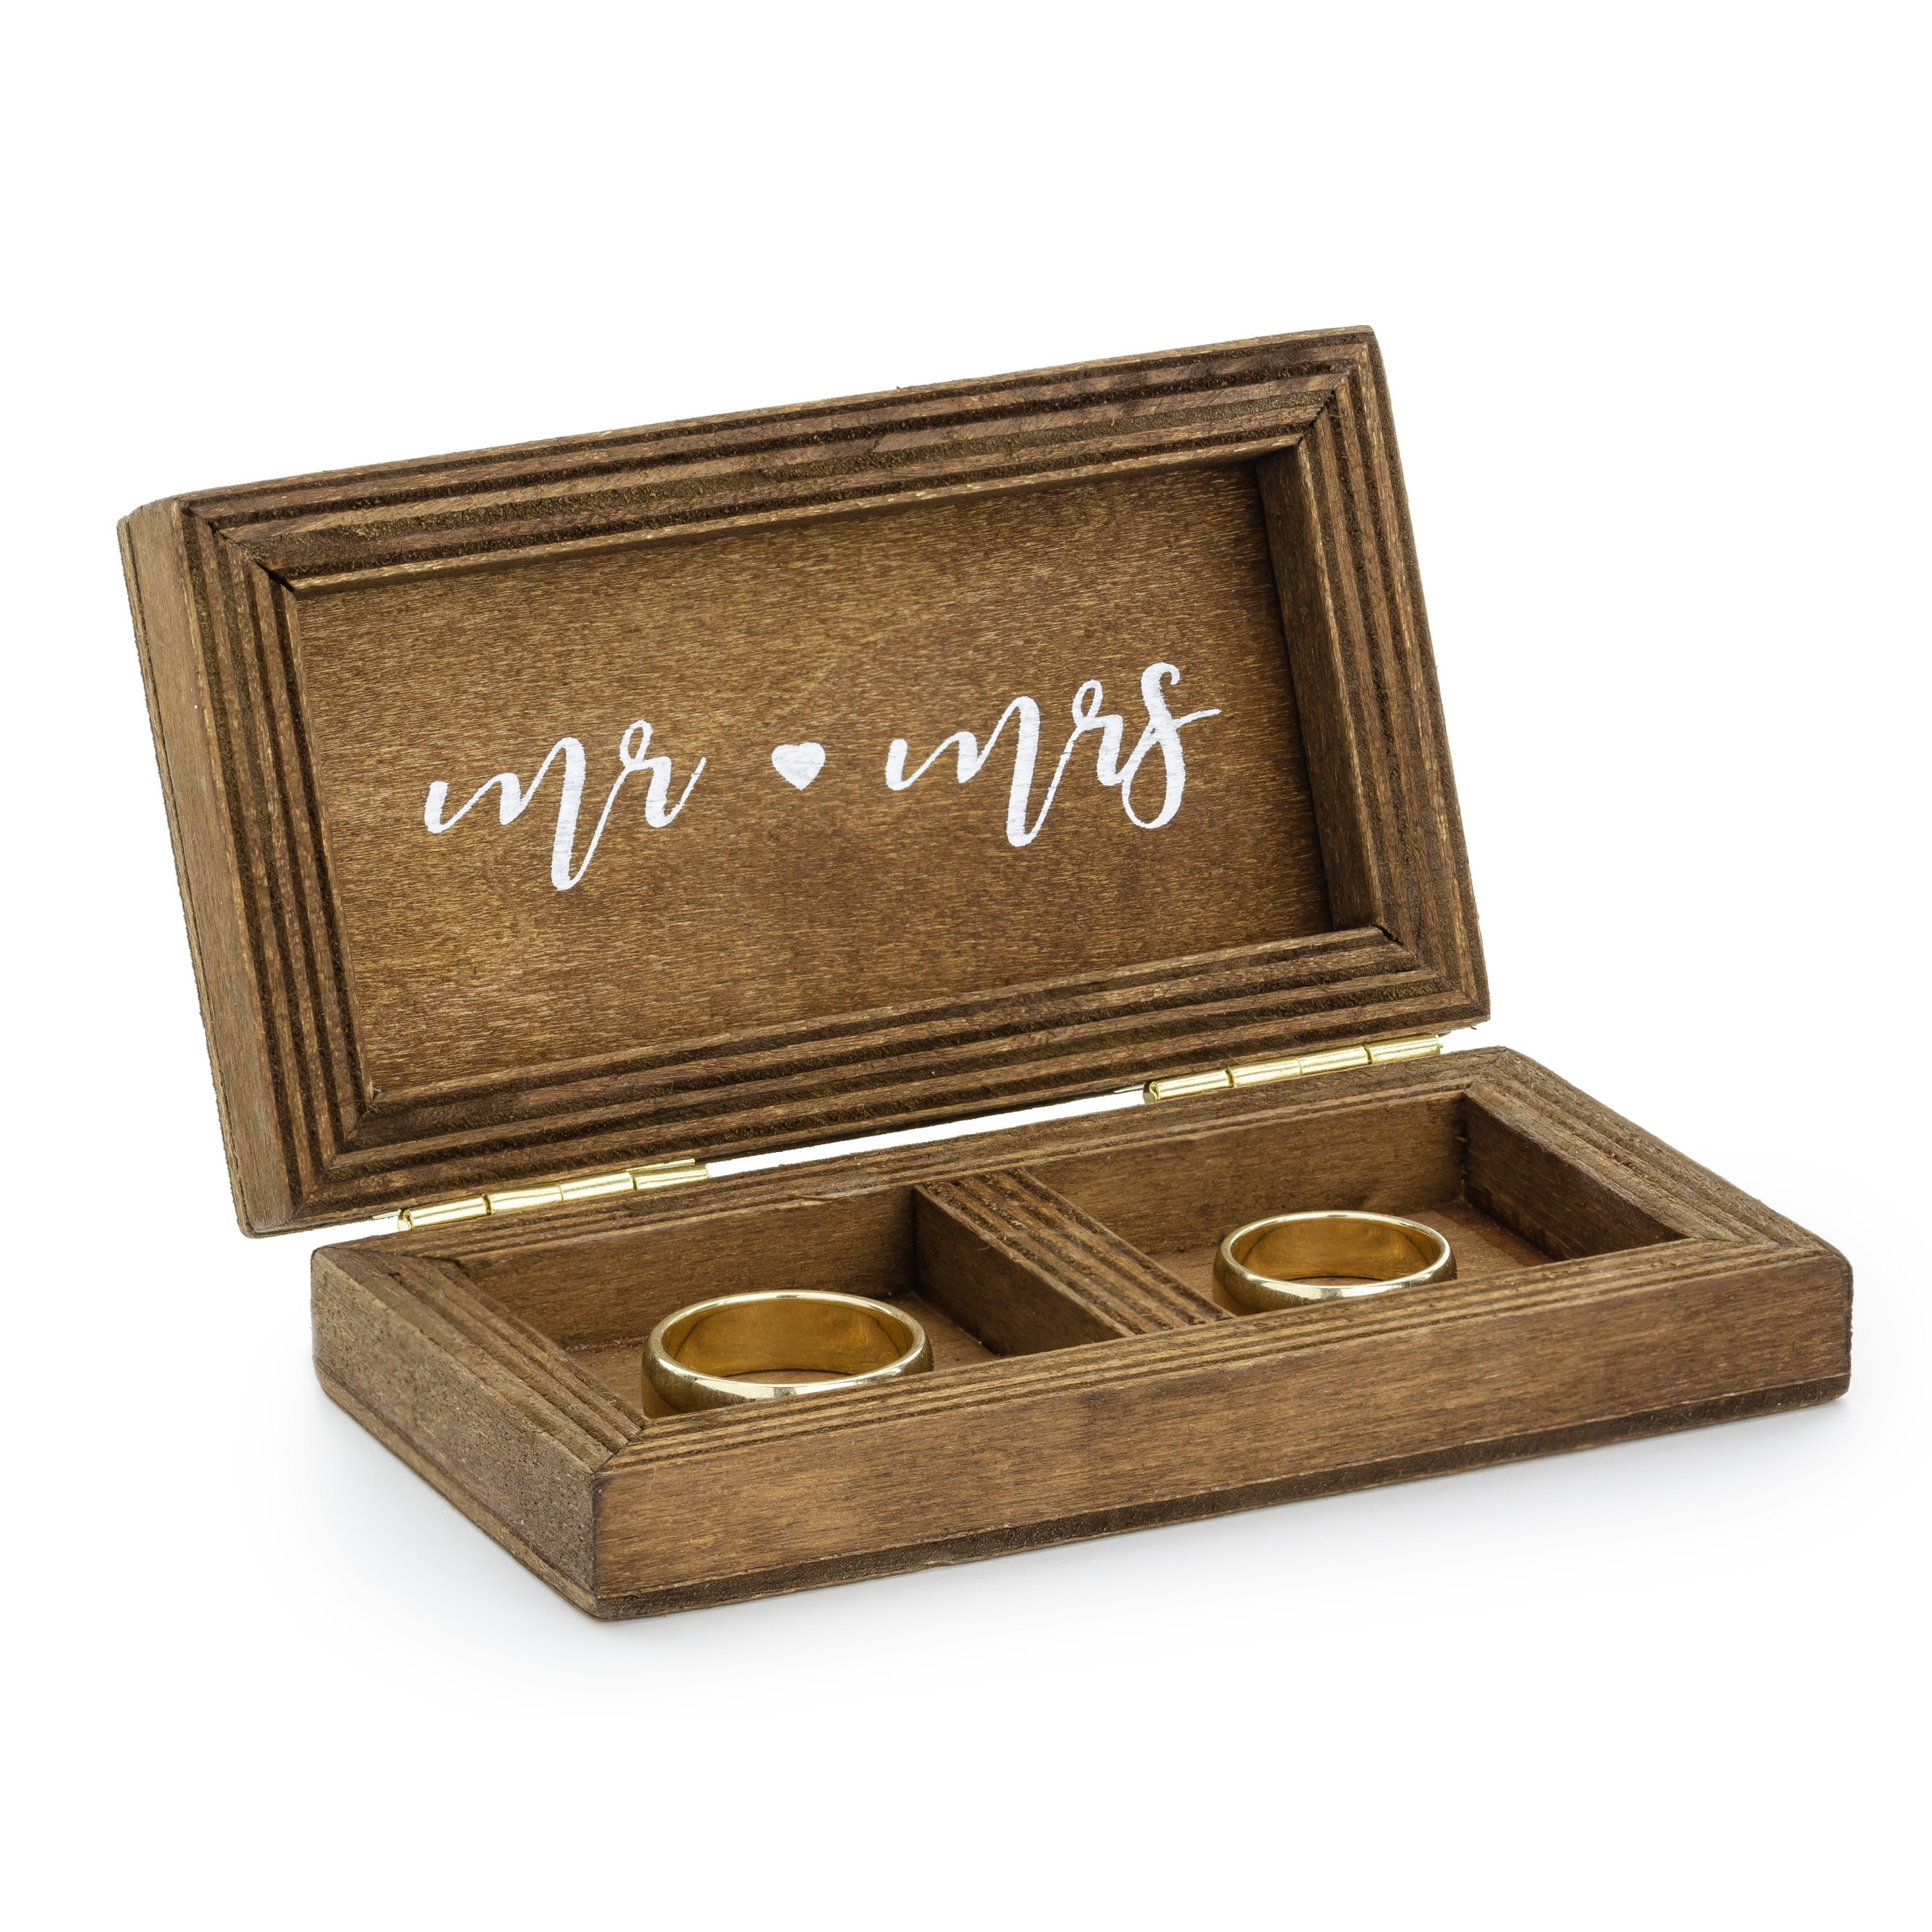 Bruiloft-huwelijk trouwringen kistje hout MR and MRS alternatief ringkussen 10 x 5,5 cm